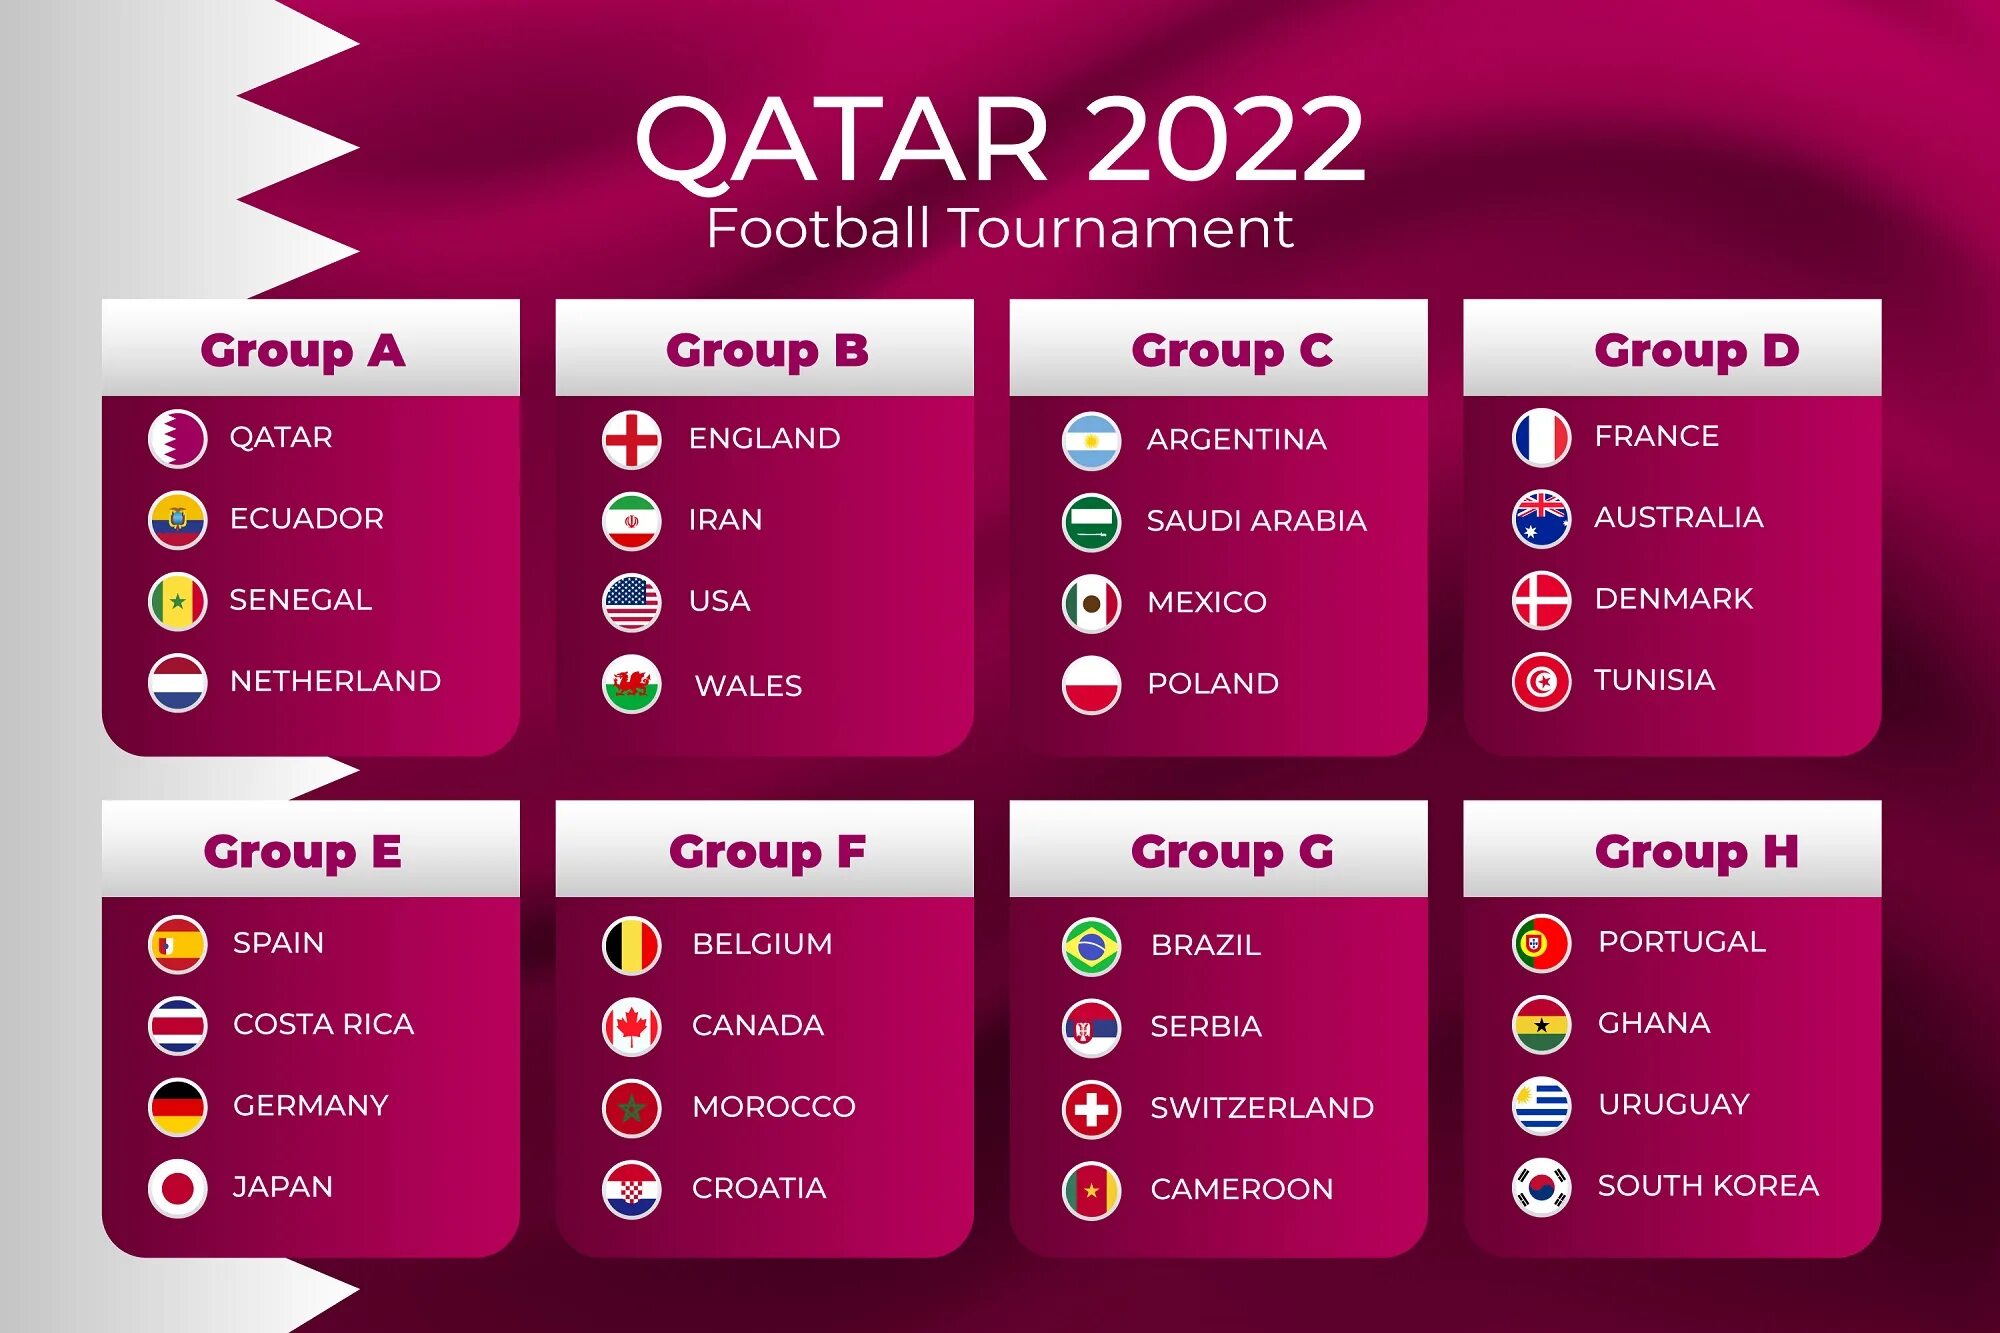 Группа чемпионата. Группы чемпионата мира. Группы чемпионата мира по футболу 2022. FIFA World Cup 2022 таблица. Катар 2022 Чемпионат мира по футболу отборочный турнир.